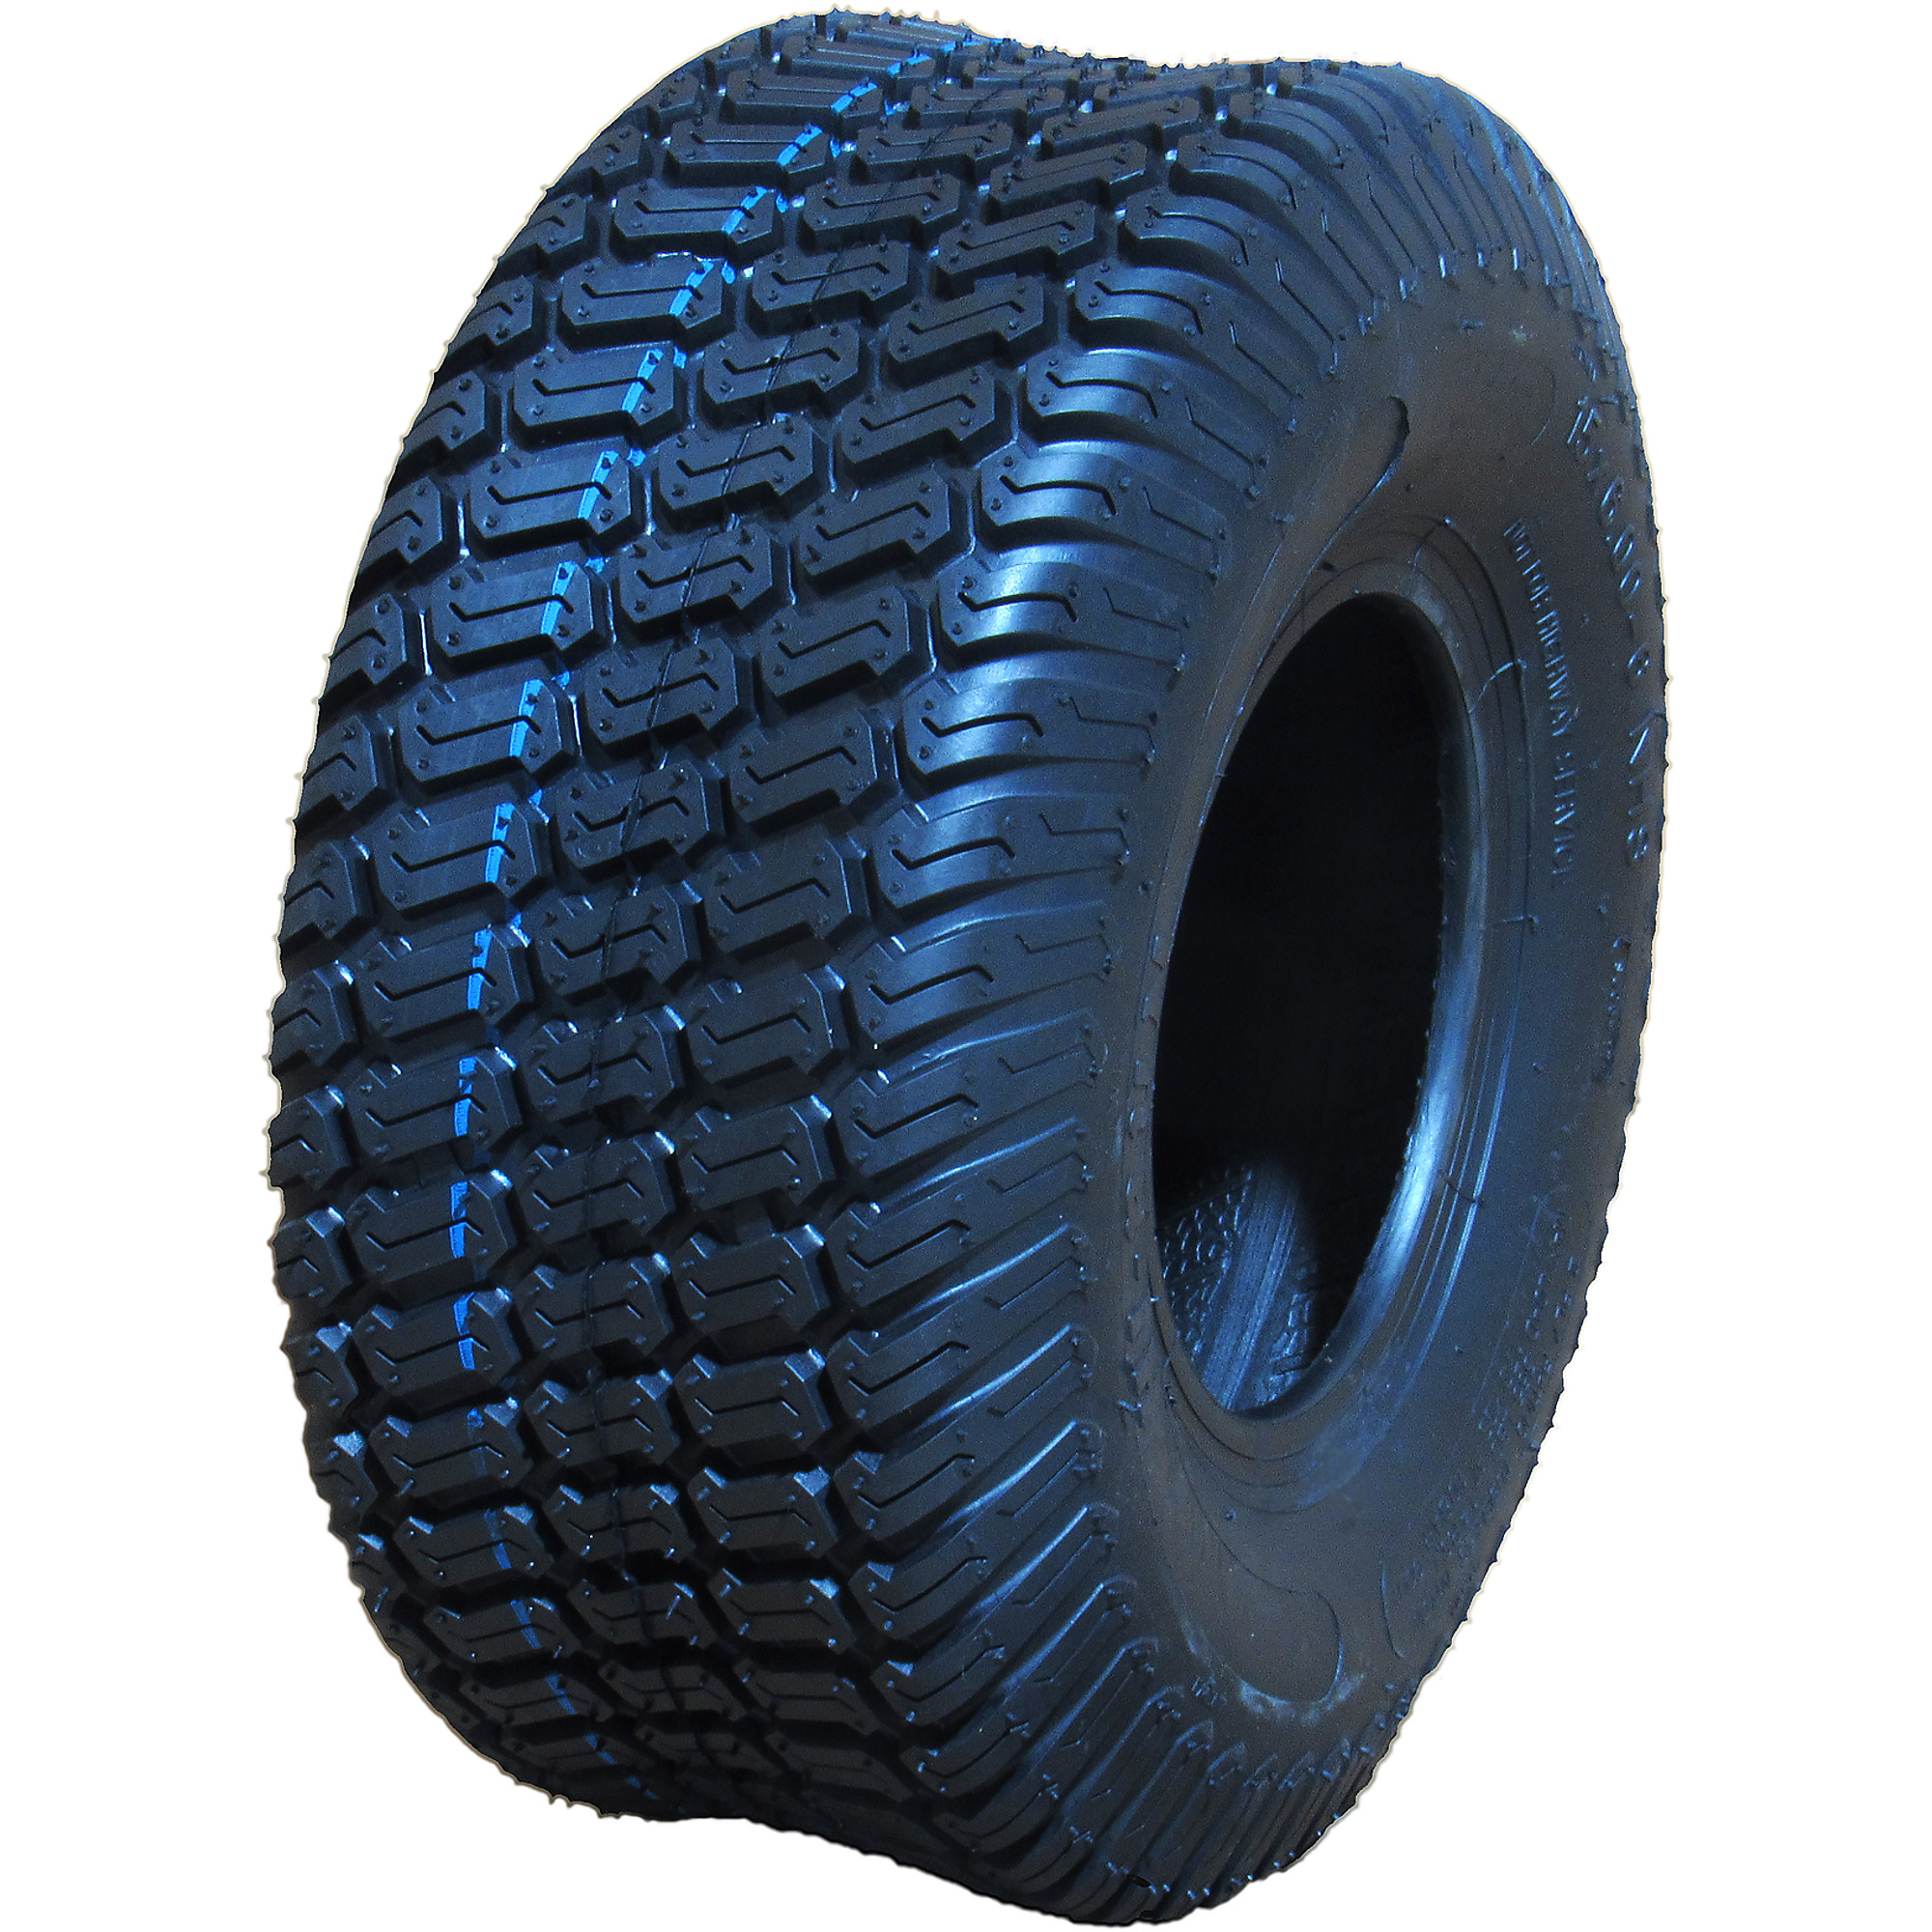 HI-RUN, Lawn Garden Tire, SU05 Turf, Tire Size 20X8.00-8 Load Range Rating A, Model WD1050